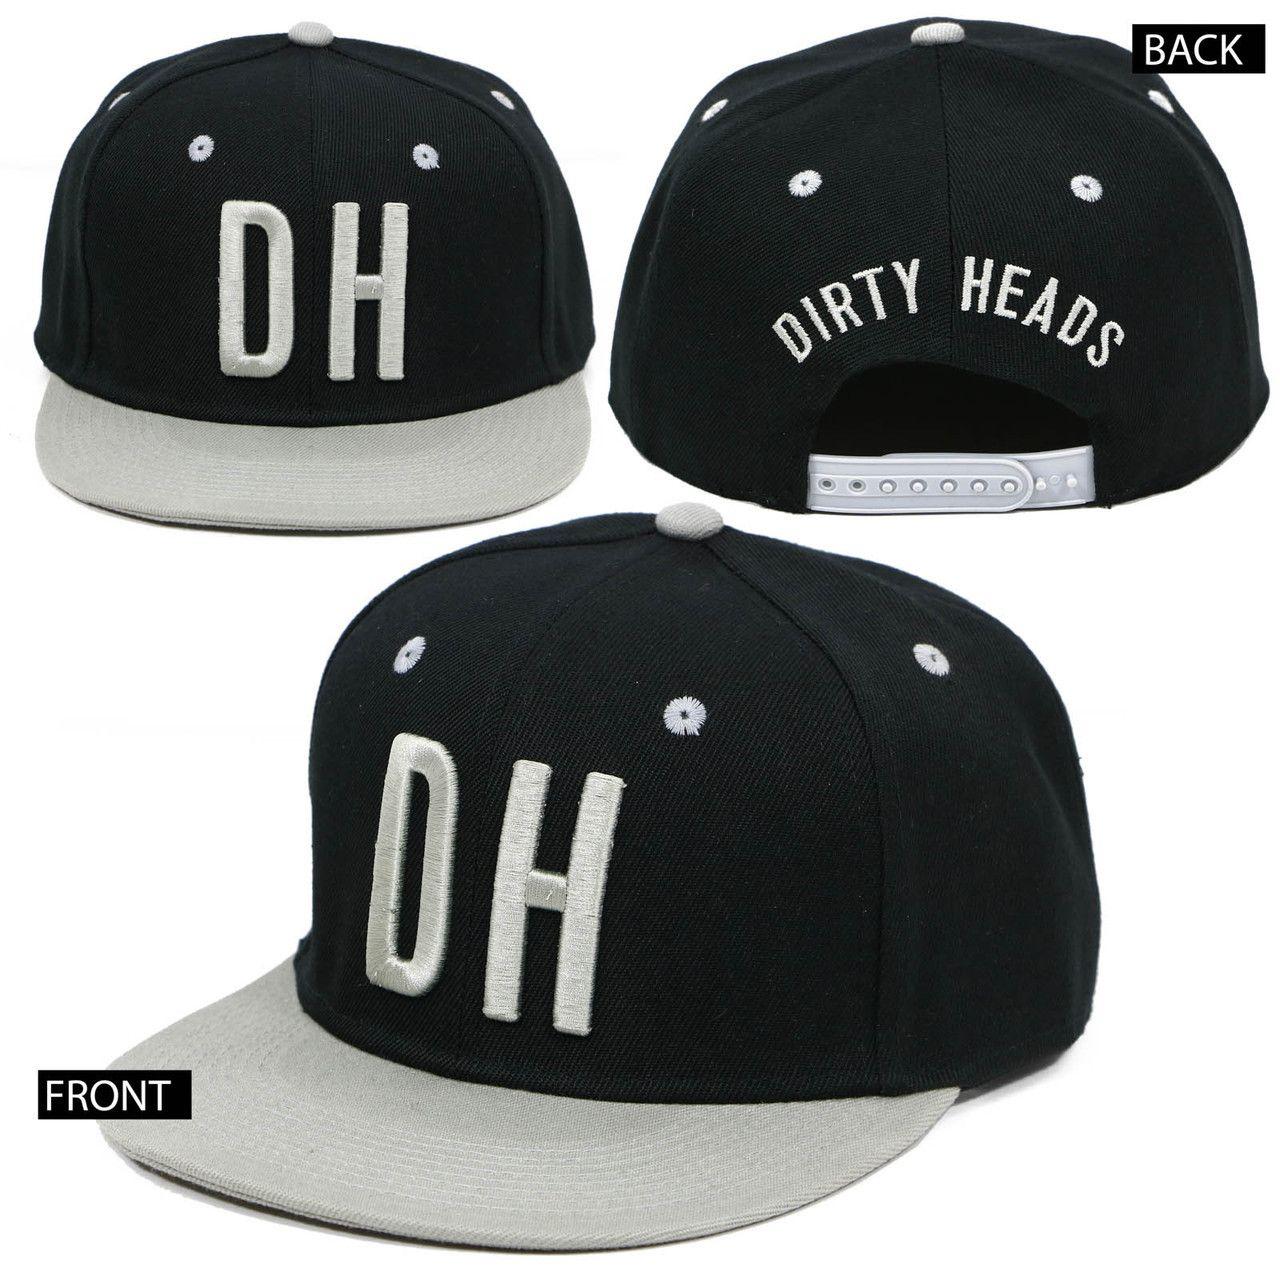 Fat Cap Logo - Dirty Heads Fat Cap Snapback Hat - Merch2rock Alternative Clothing